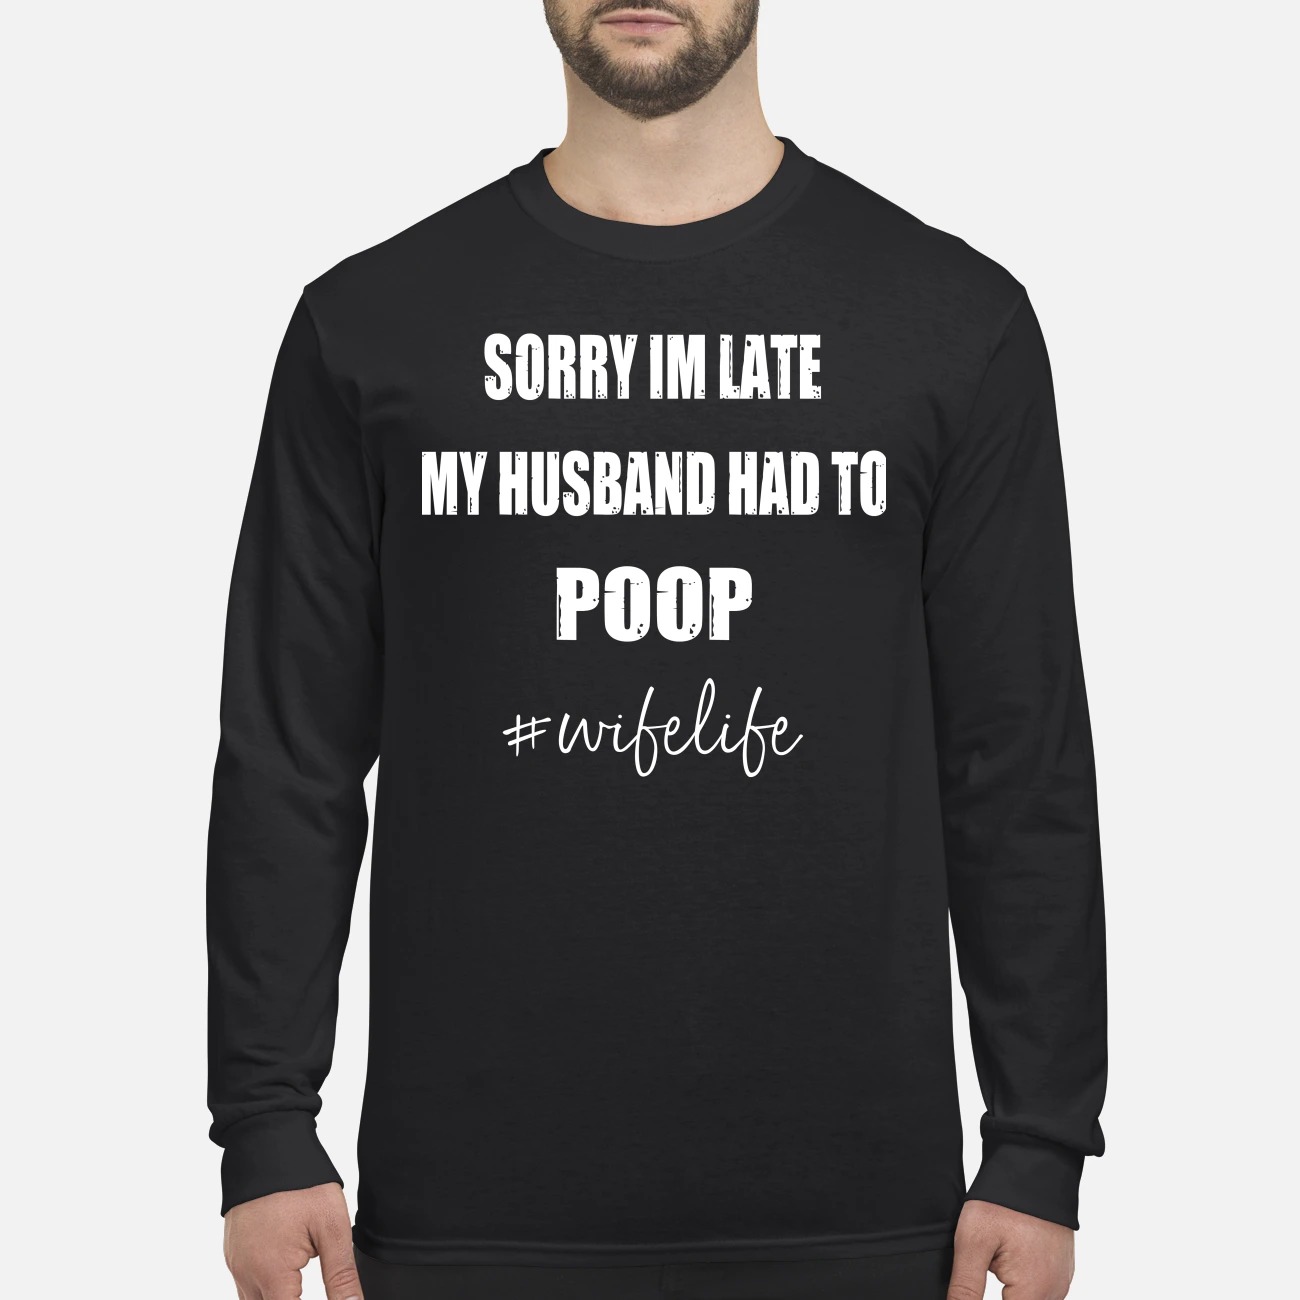 Sorry Im late my husband had to poop wifelife men's long sleeved shirt